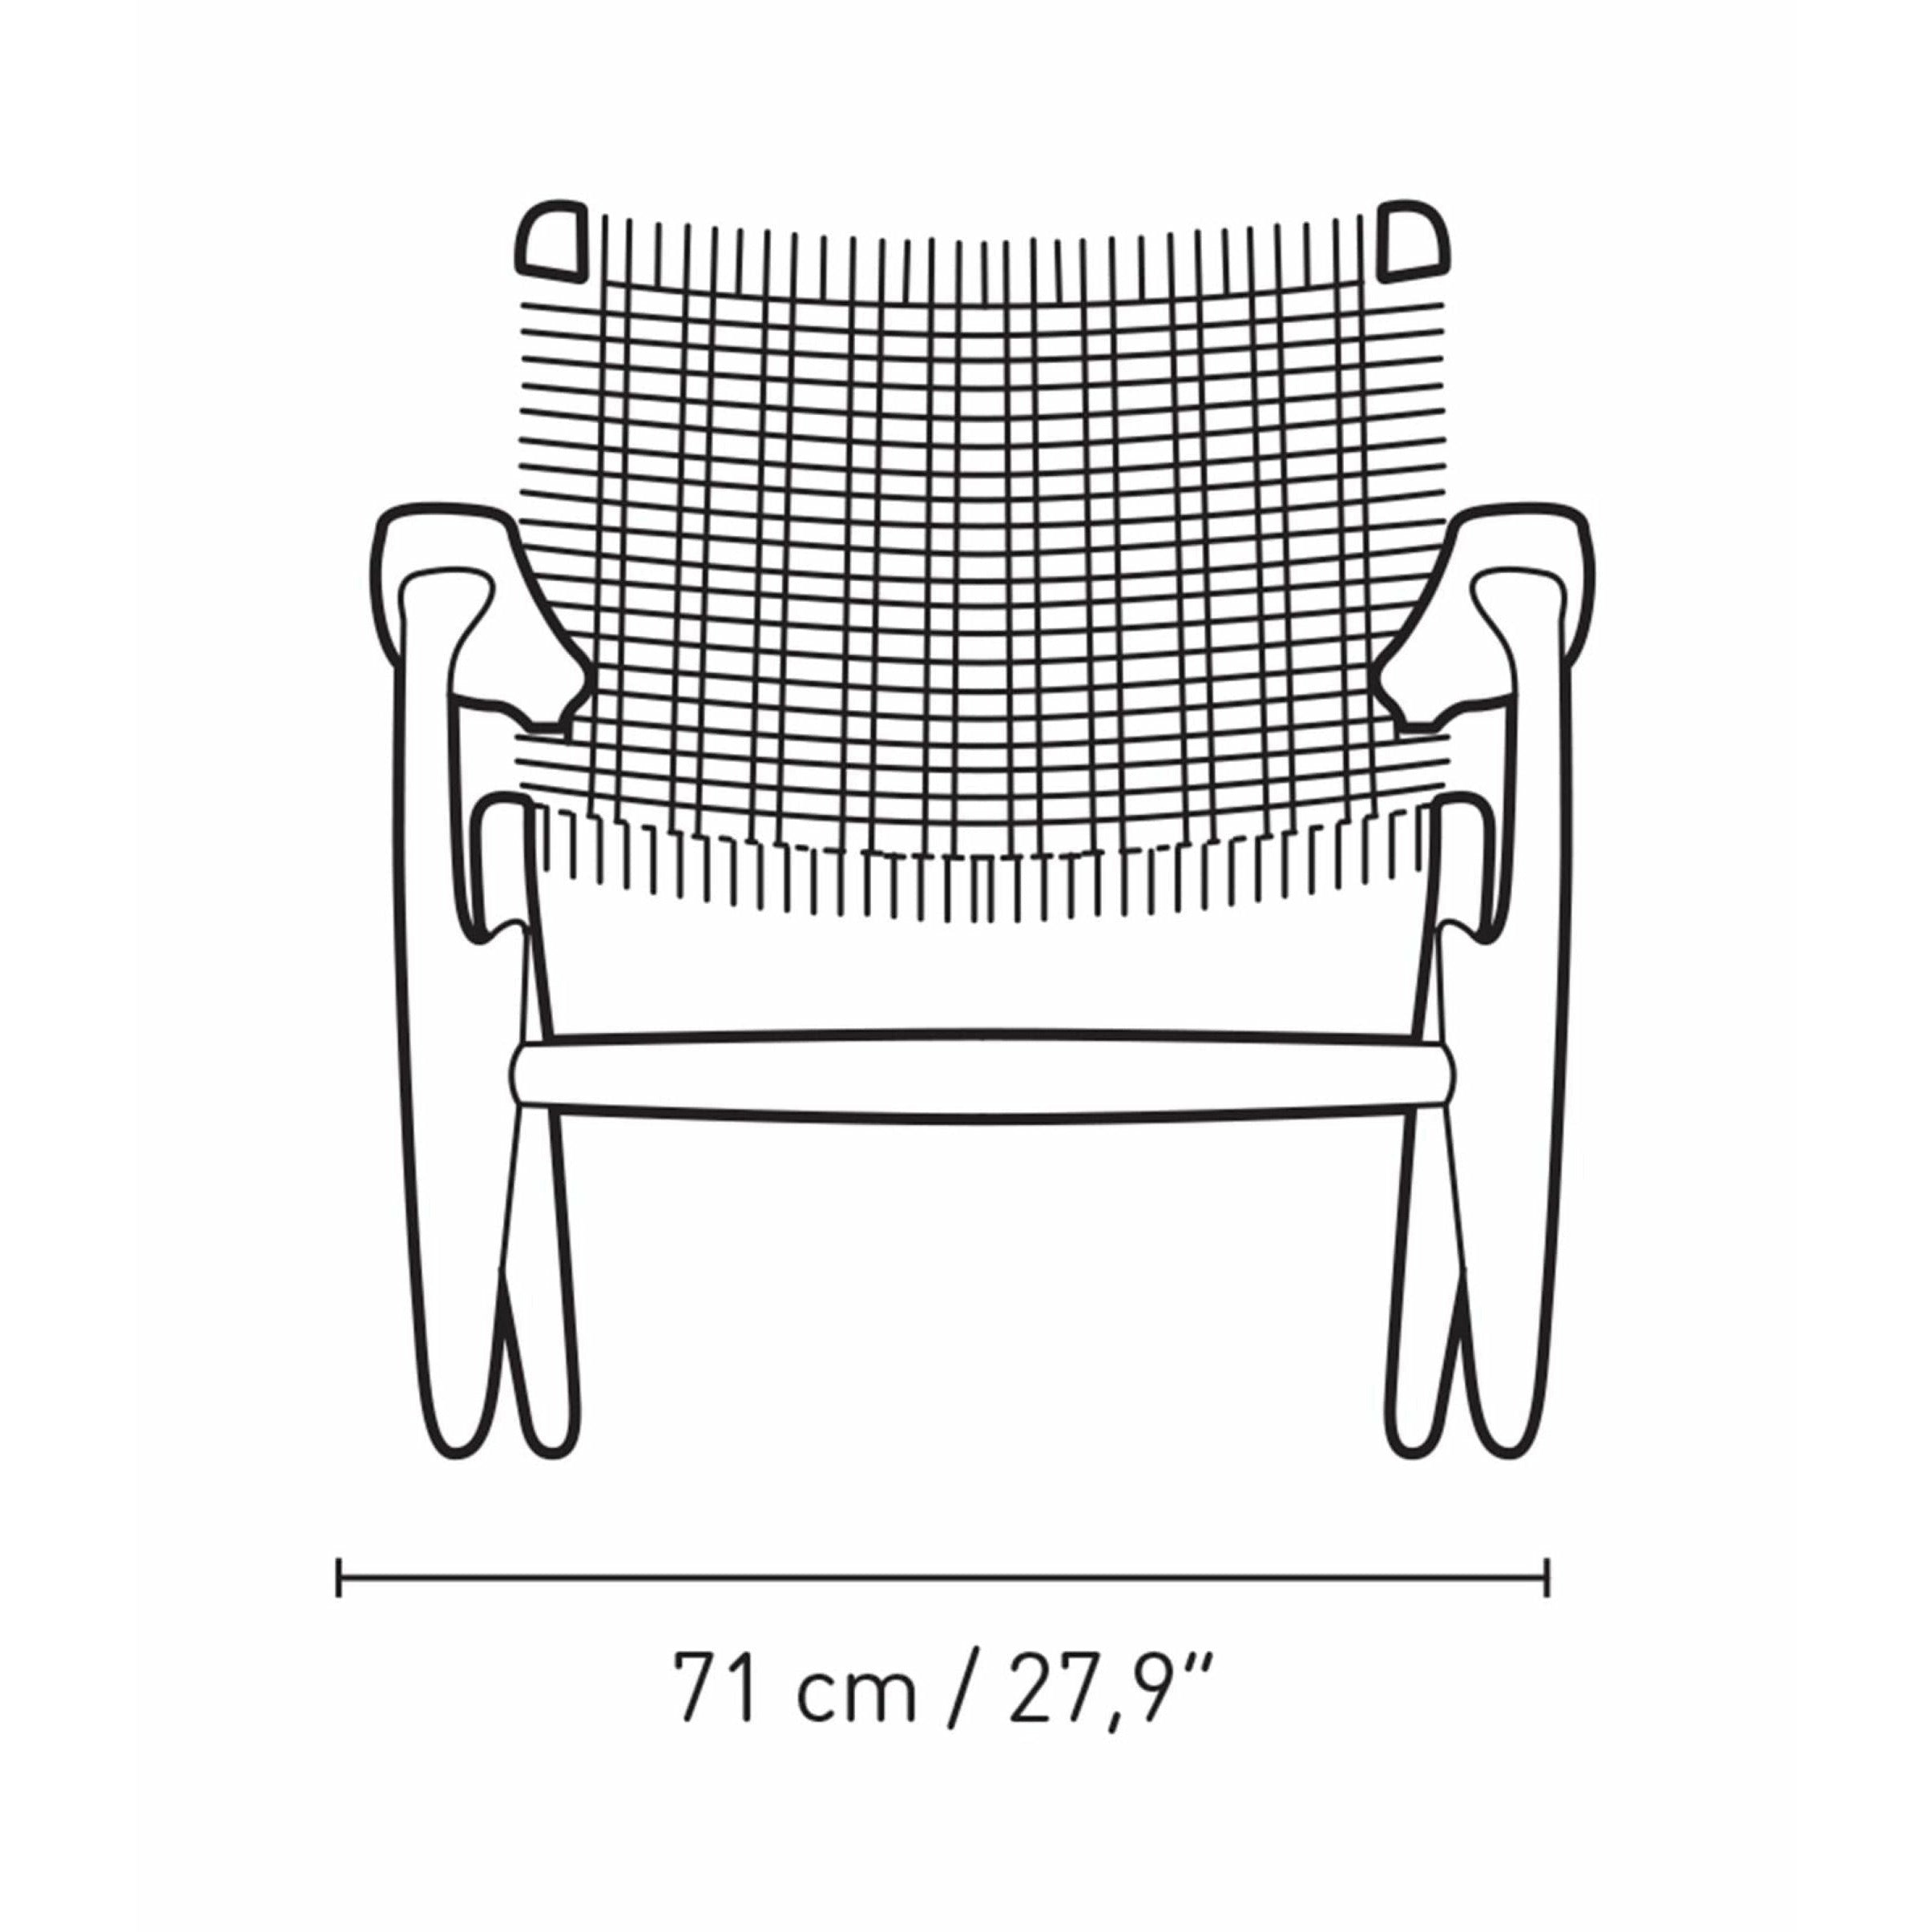 Carl Hansen CH25 Lounge Chair Eiche, Seetanggrün/Naturkabel